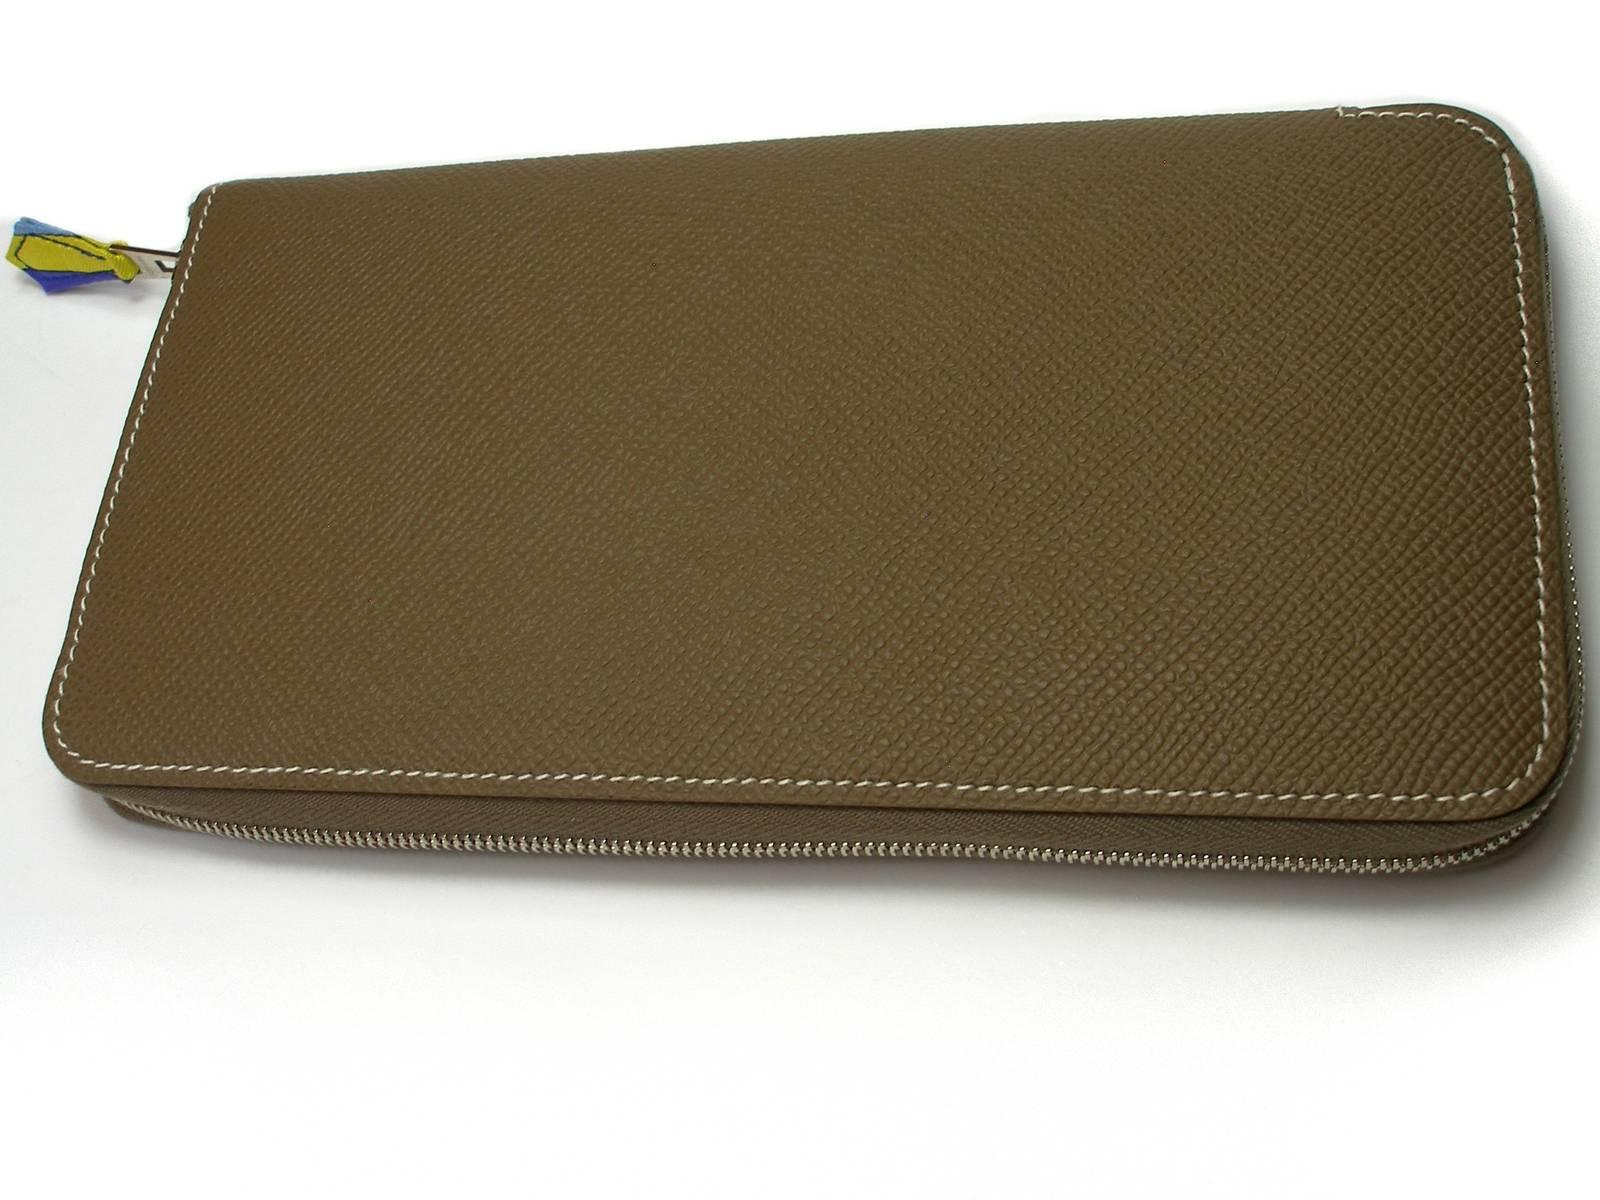 Hermes classic wallet Large Size Etoupe Leather and Sangles bleu Electrique  3